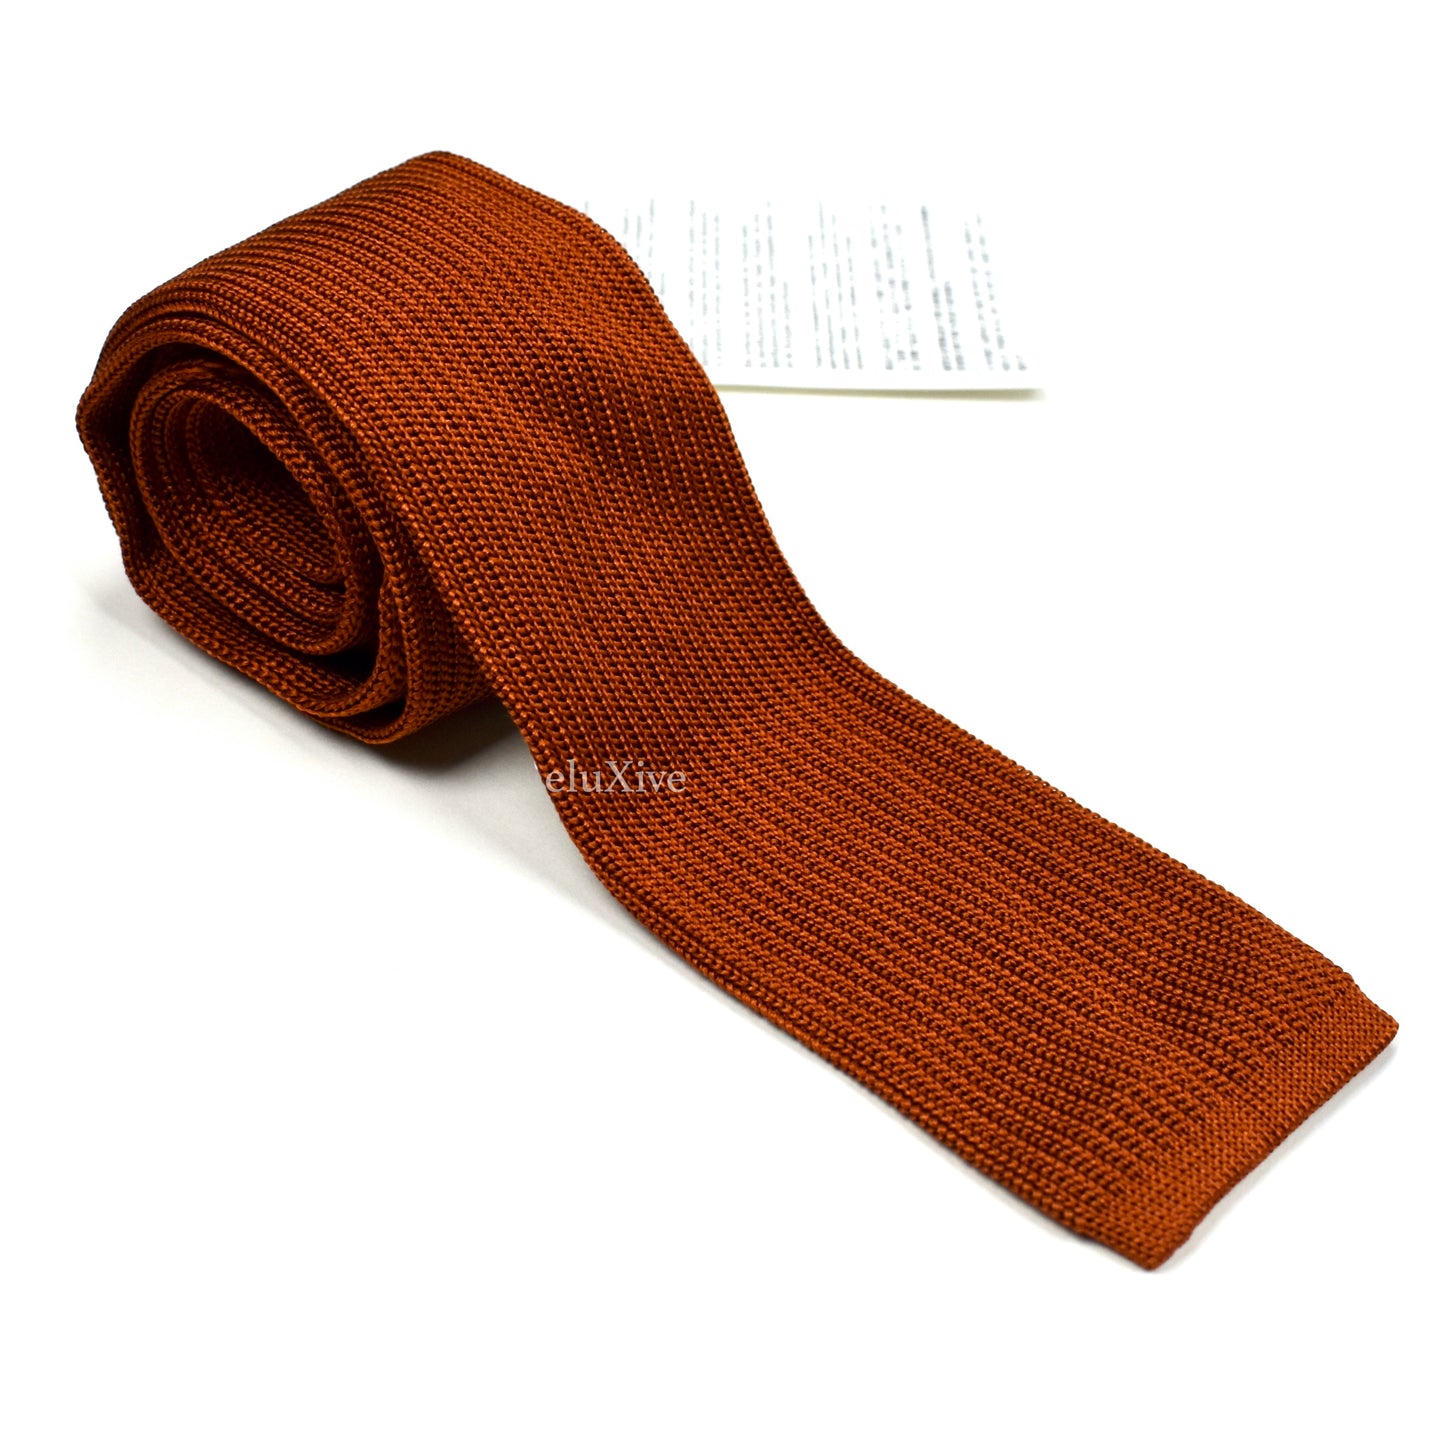 Brioni - Burnt Orange 100% Silk Tricot Knit Tie